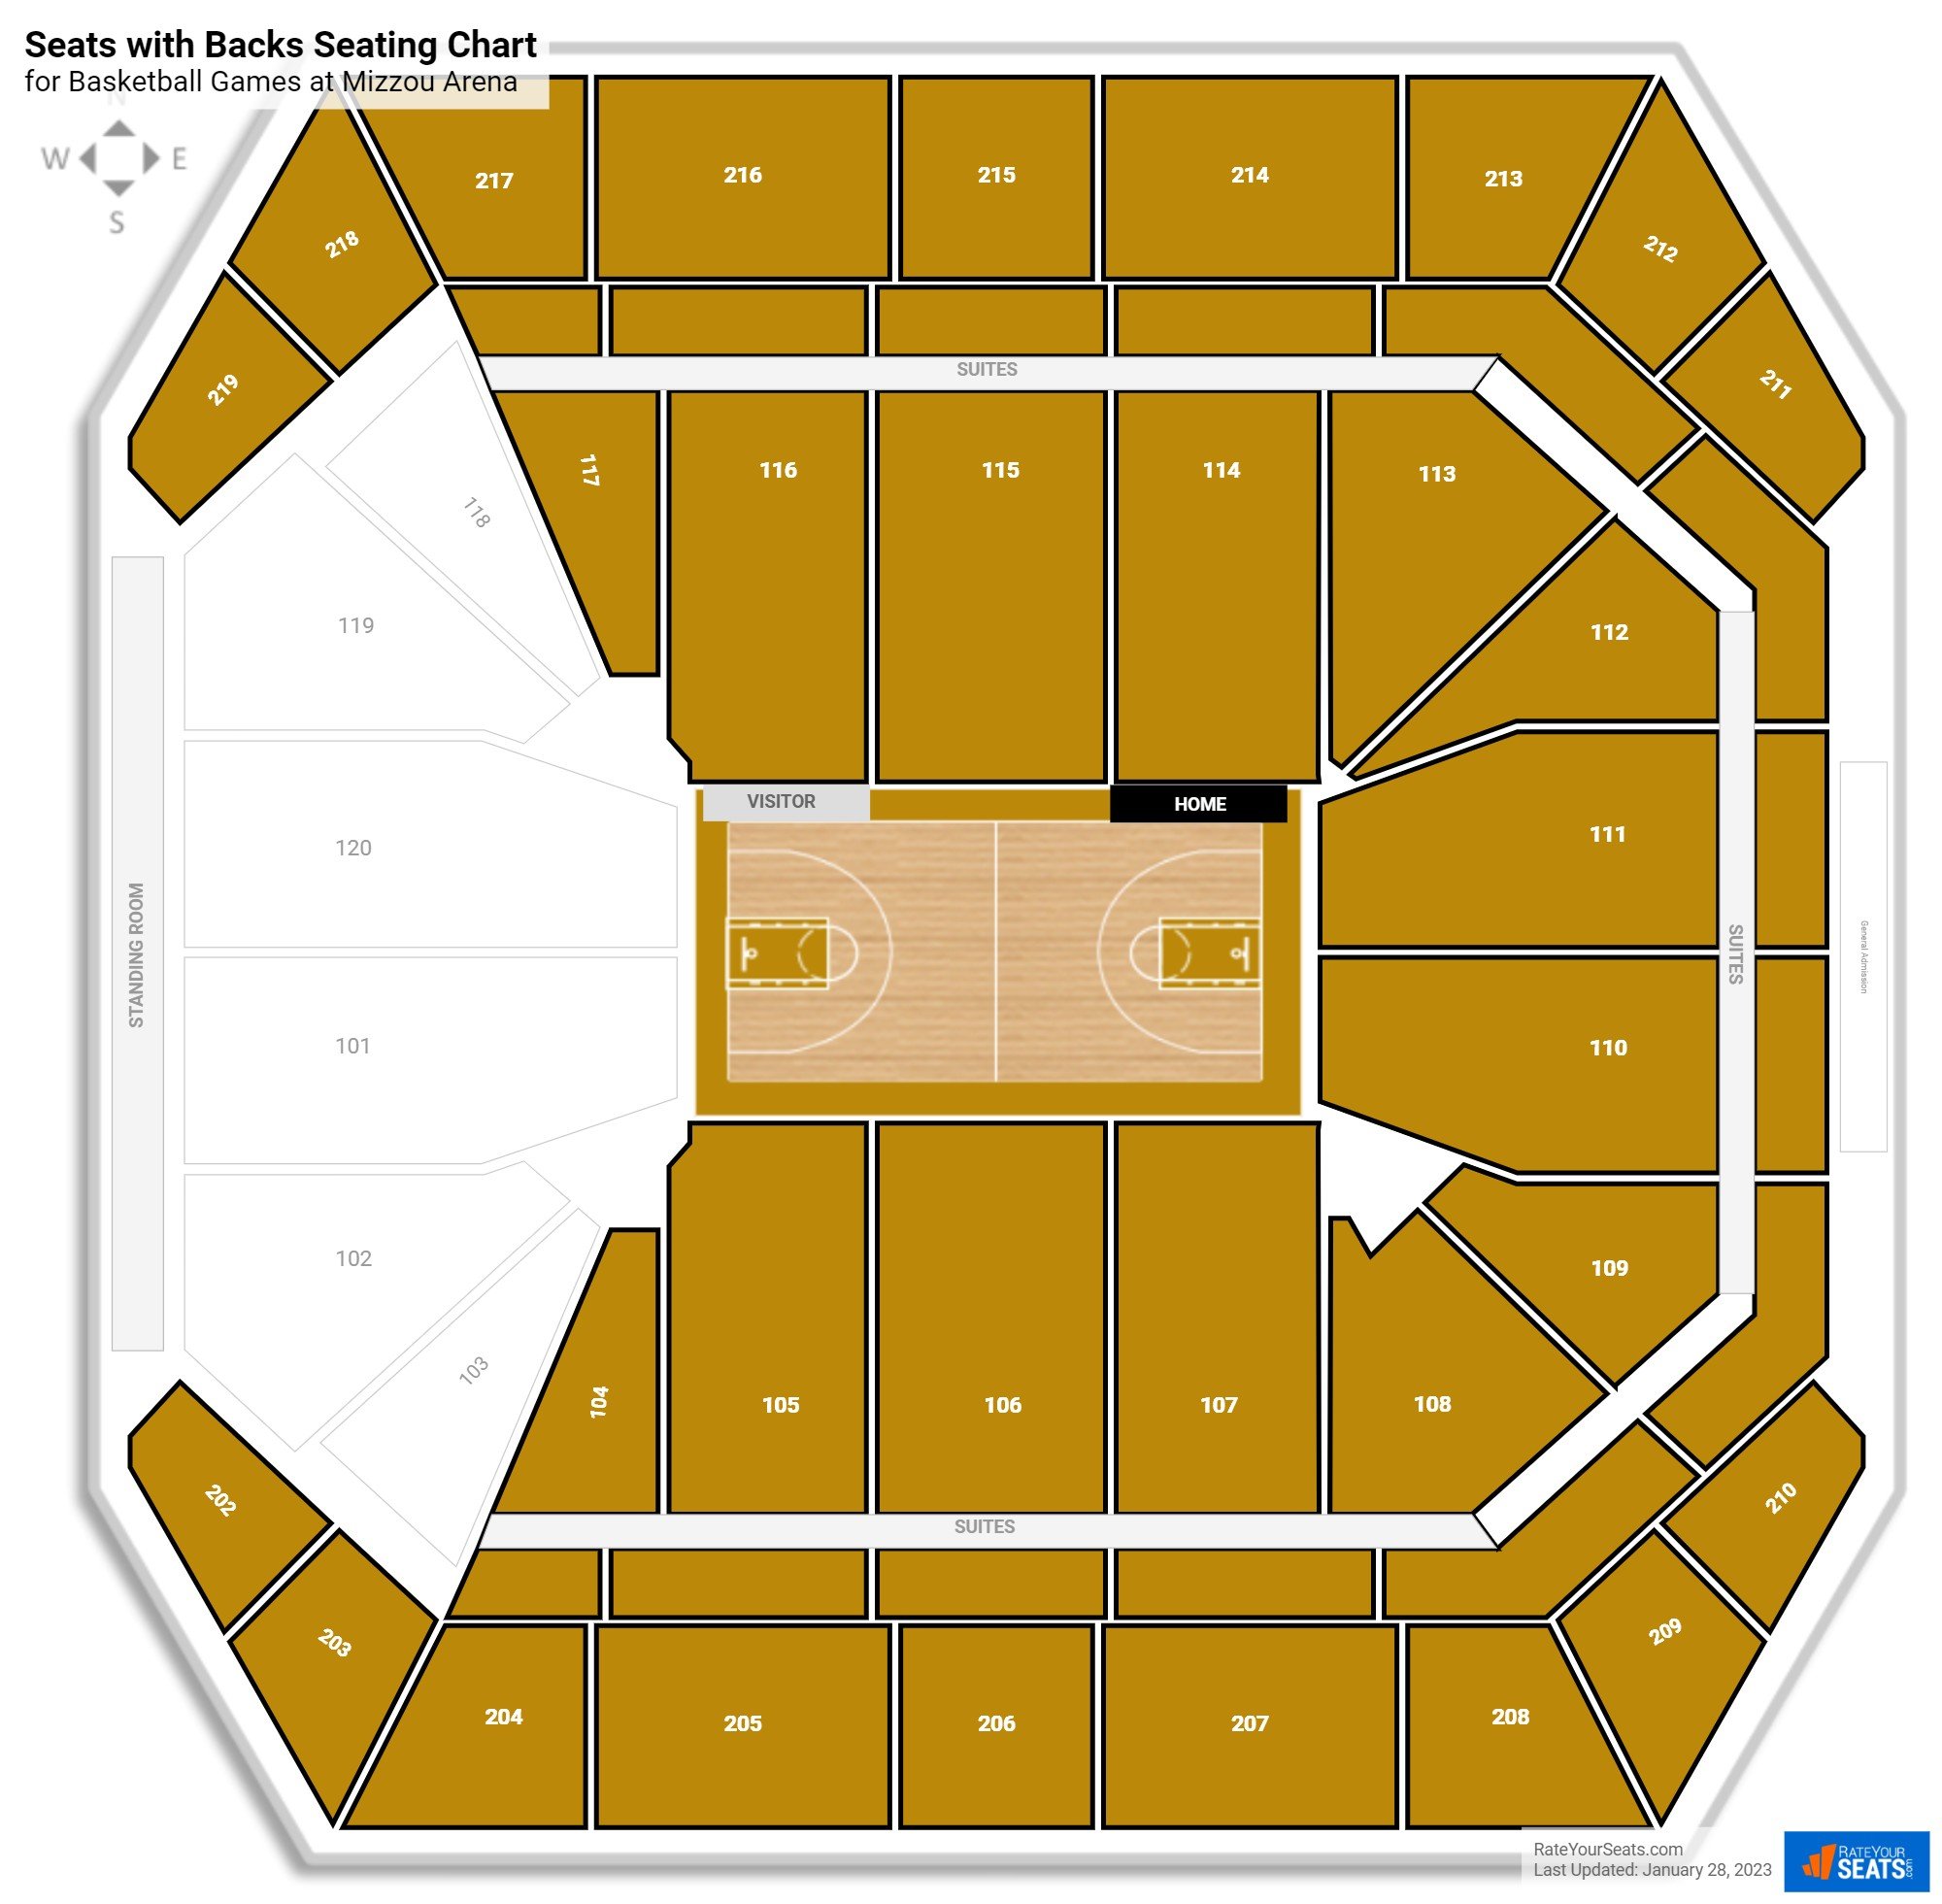 Basketball Seats with Backs Seating Chart at Mizzou Arena